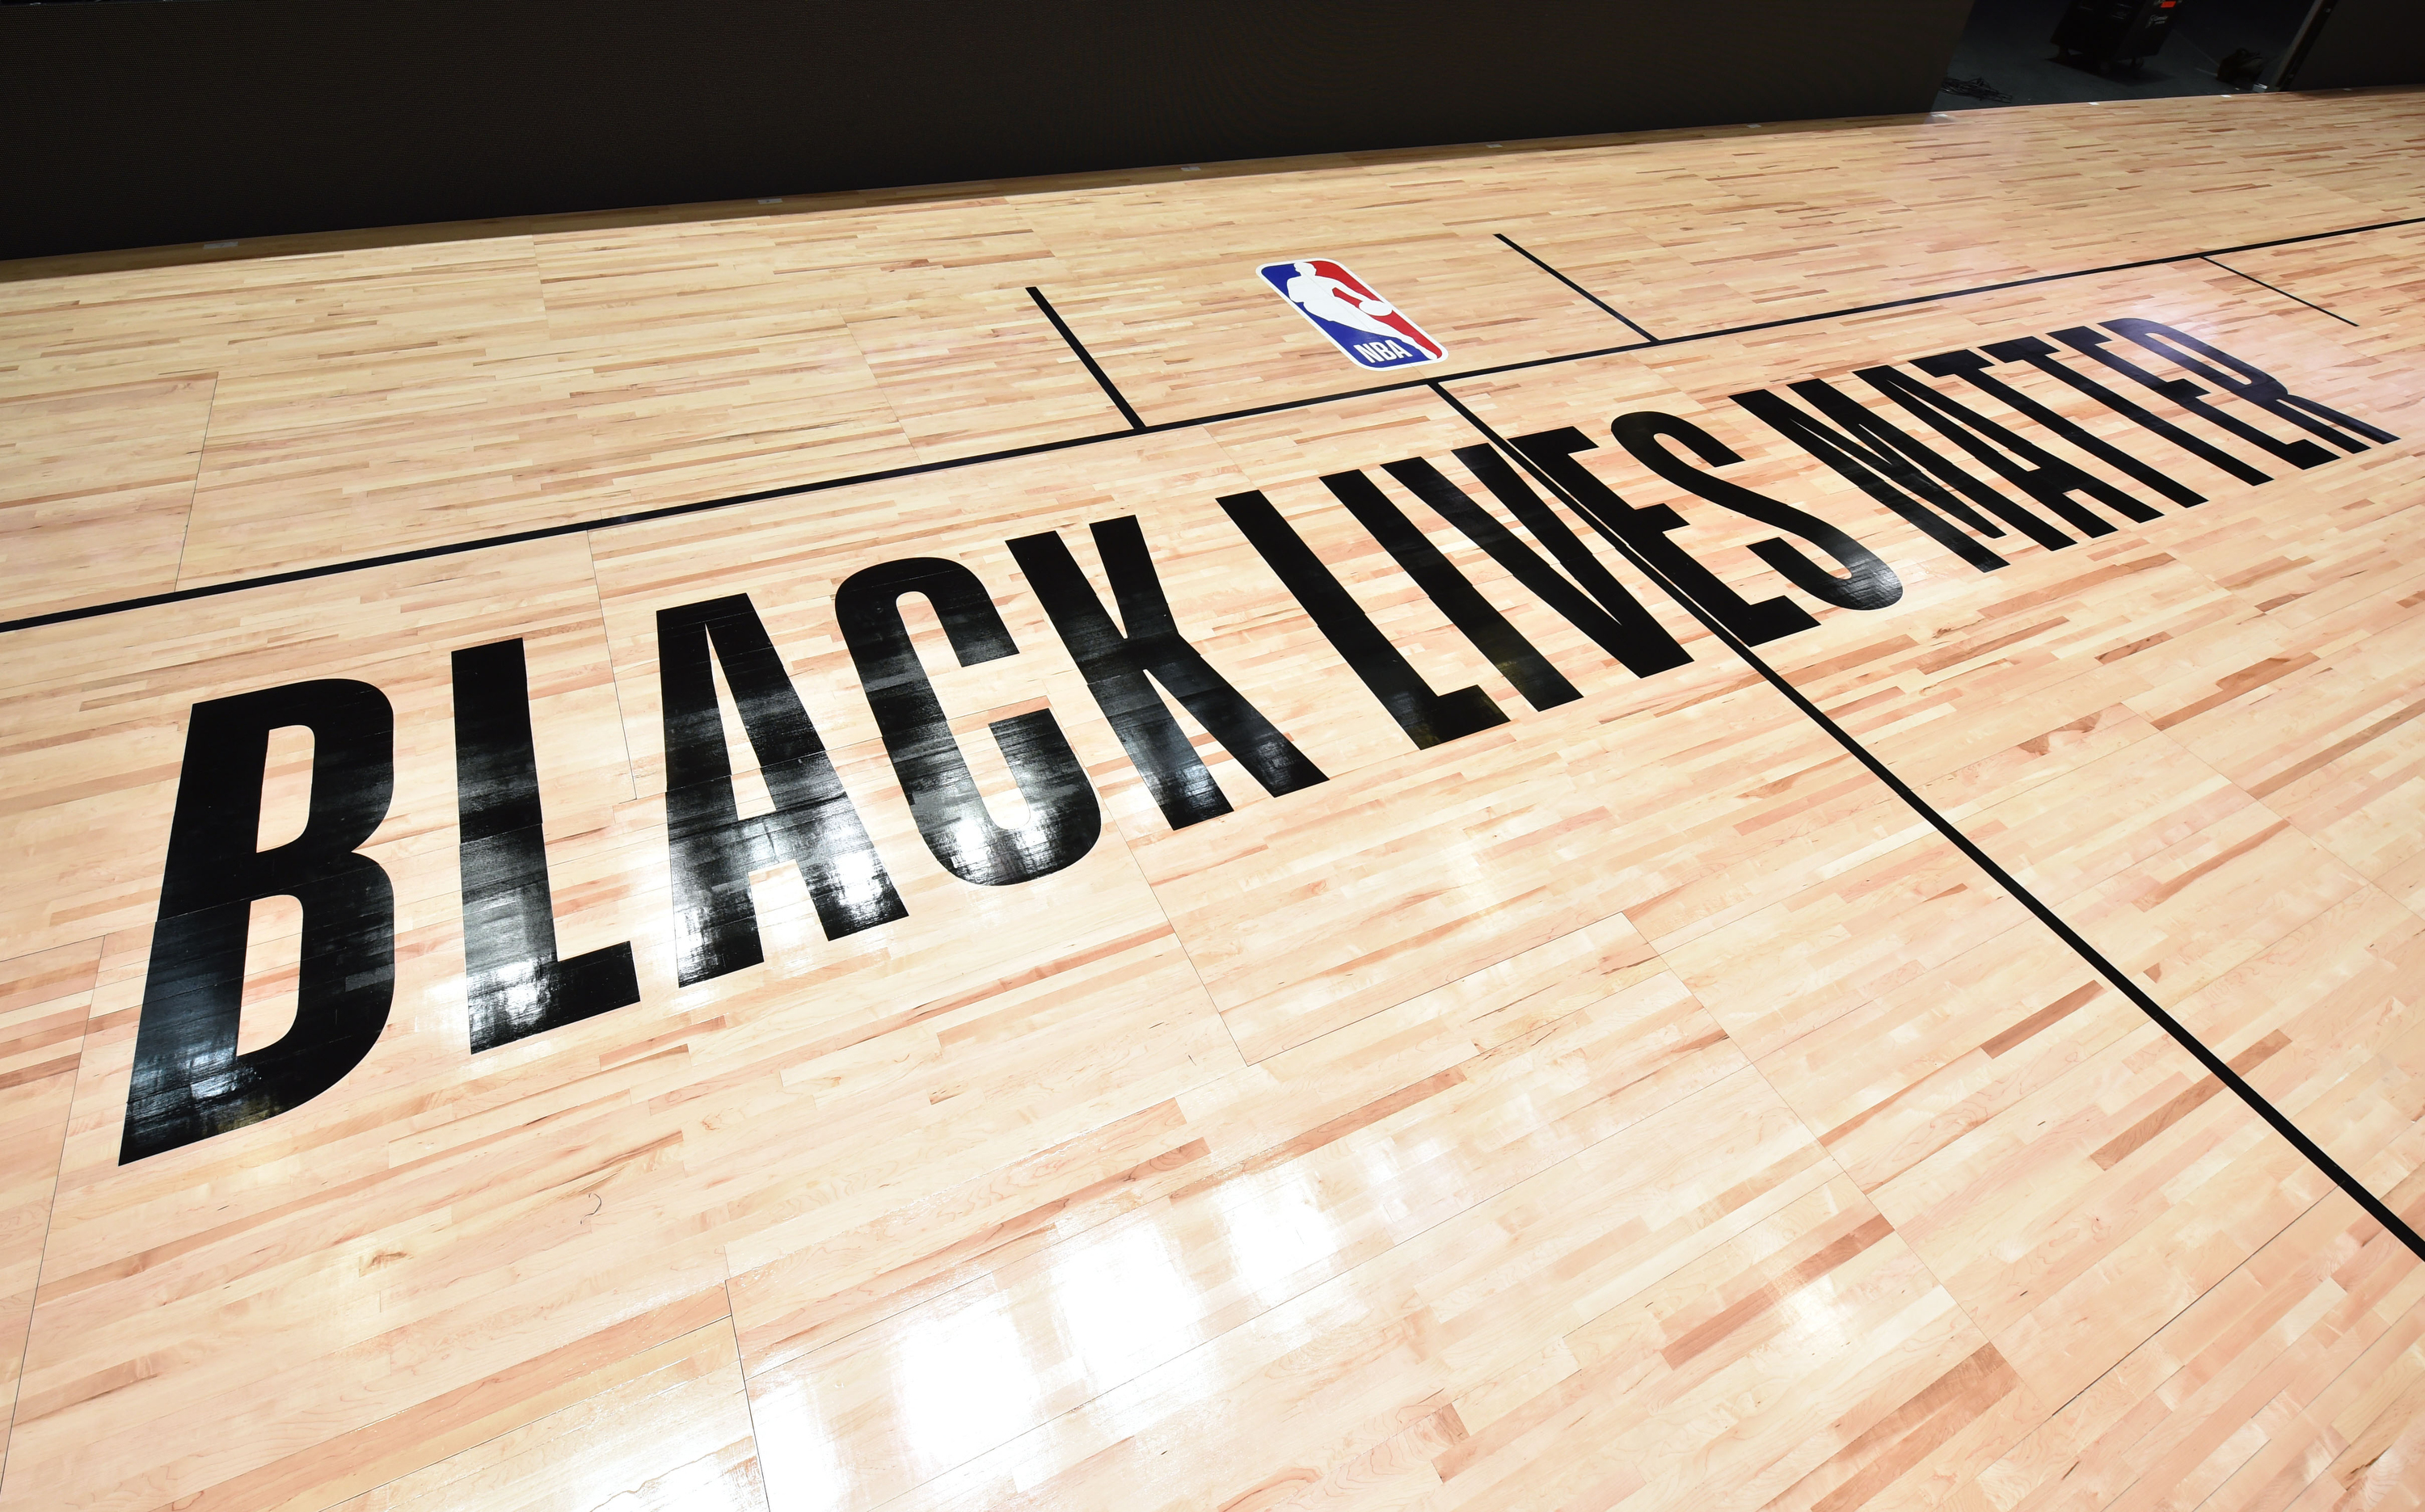 LA Clippers coach Doc Rivers has emotional response to Jacob Blake shooting